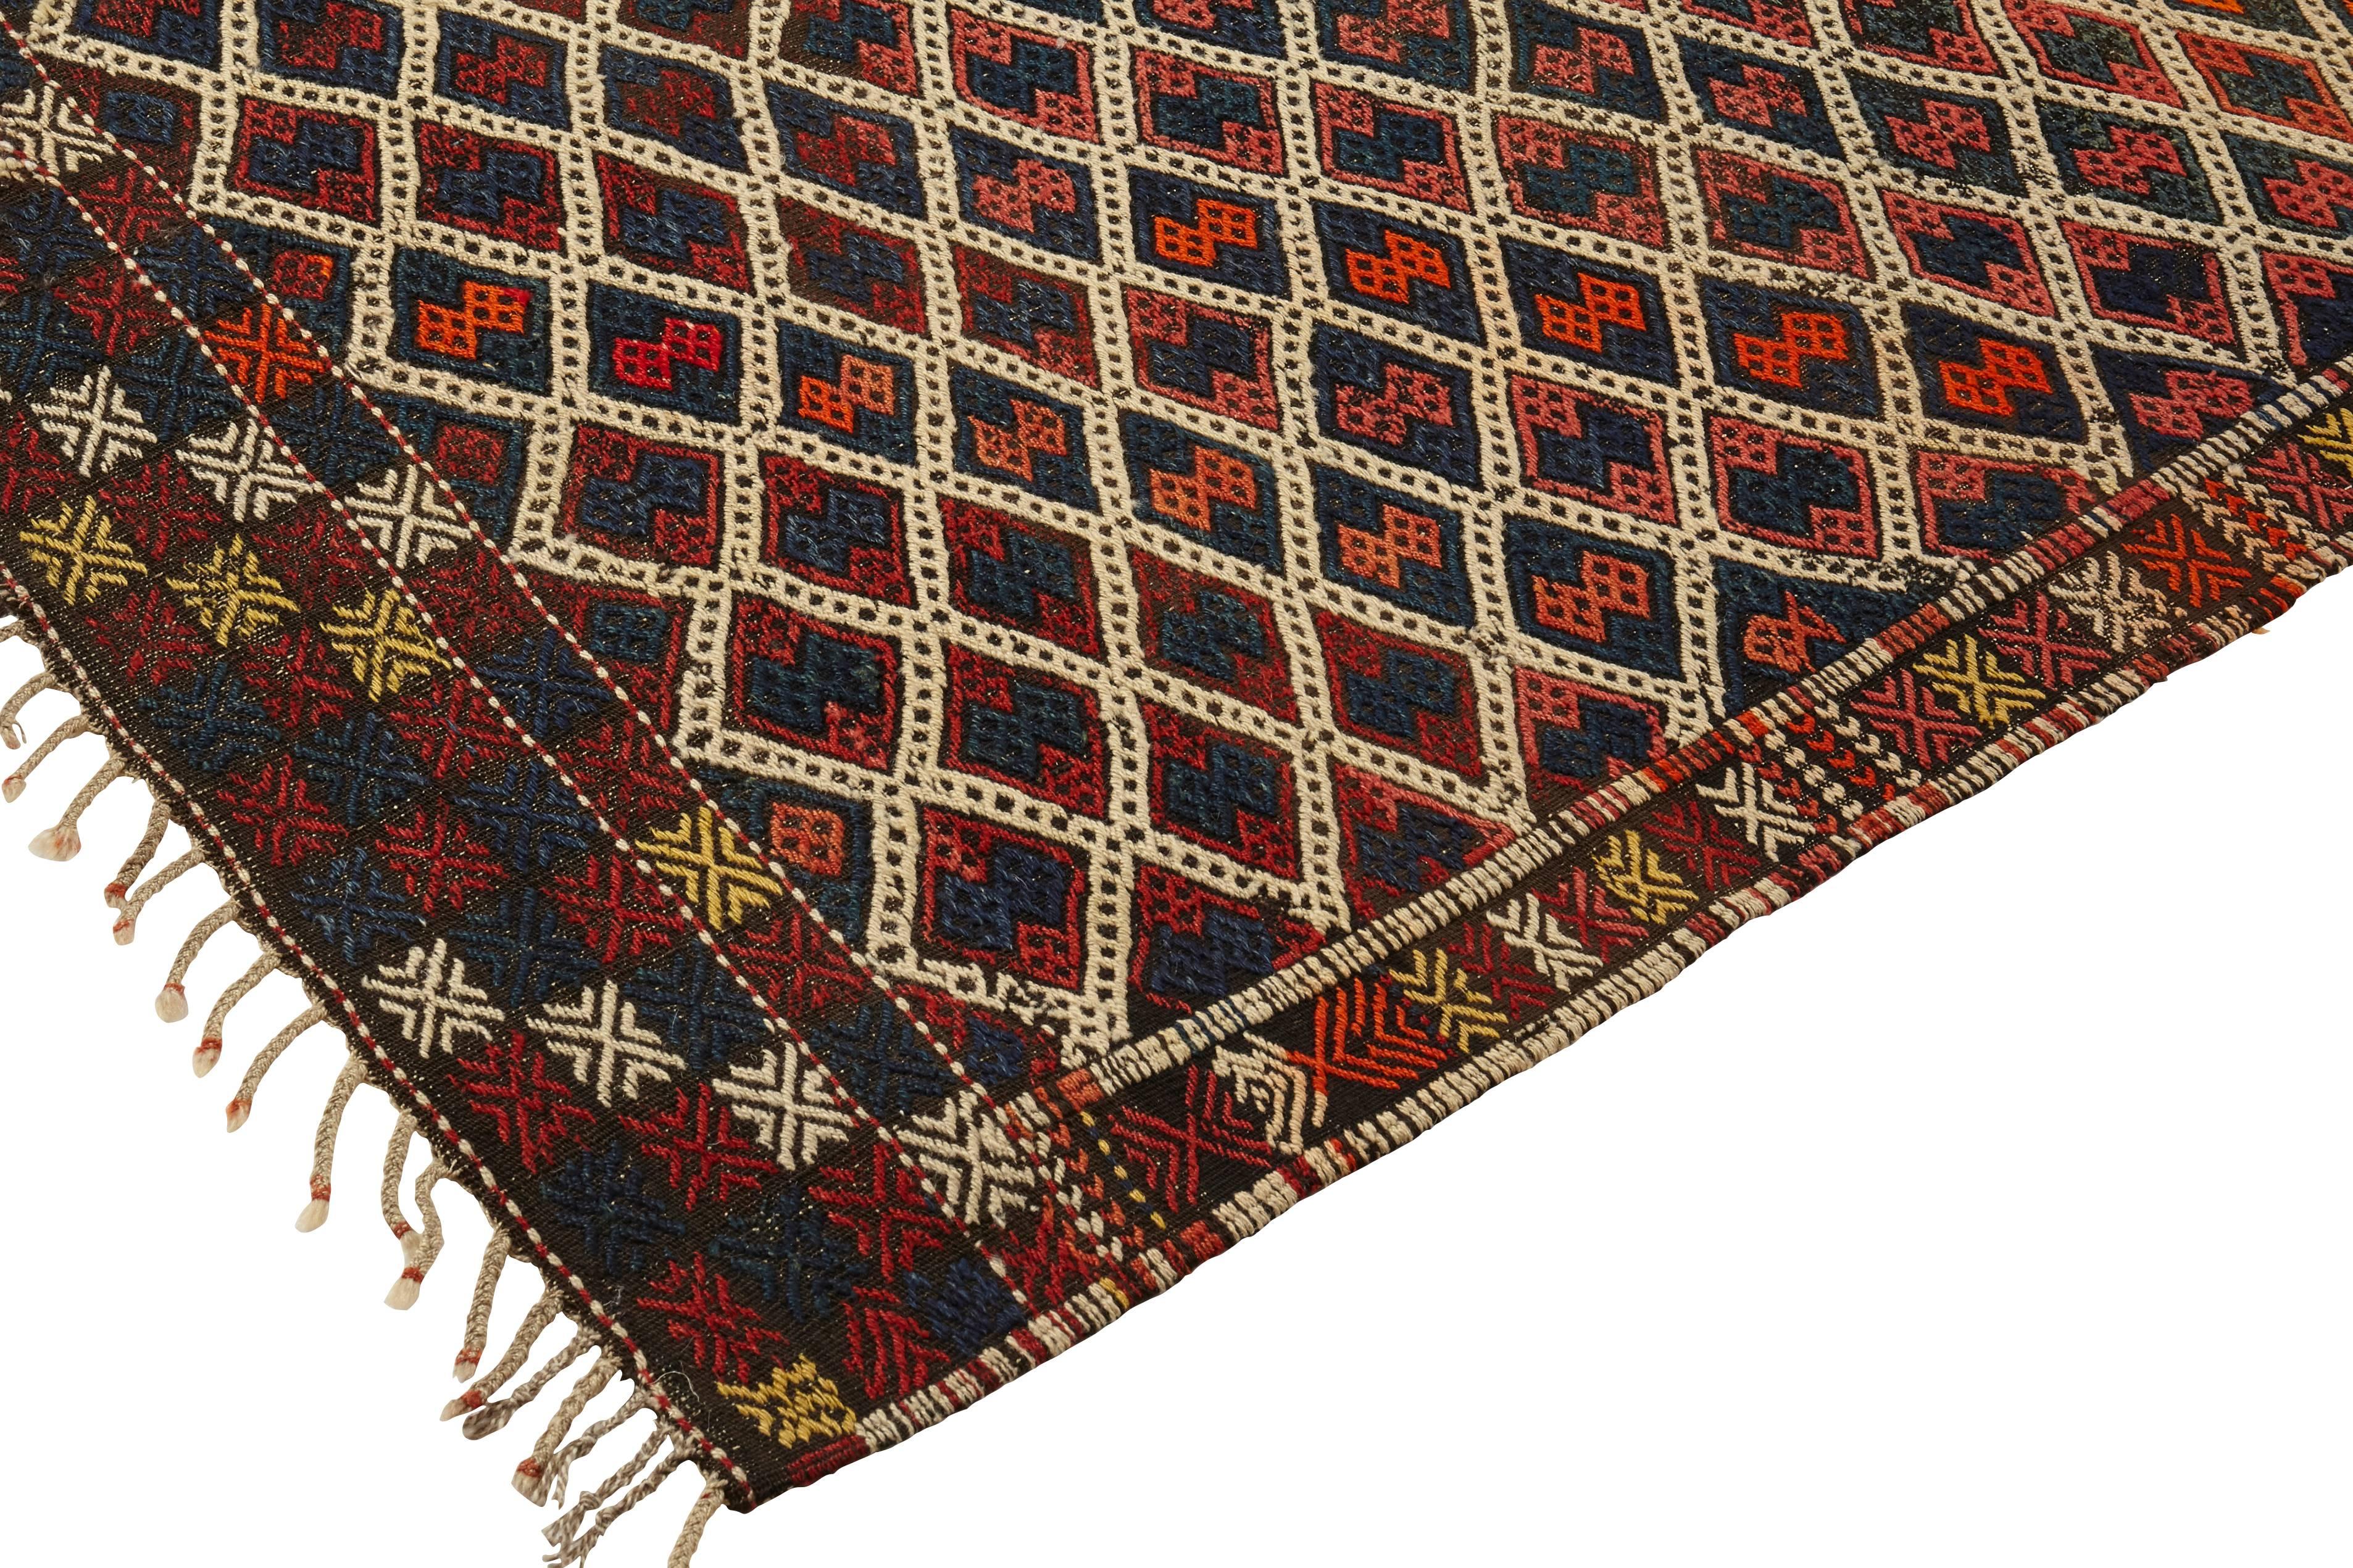 Jajim rug,
West Anatolia,
Turkey,
19th century,
Wool, flat-weave

Measures: 156 x 134 cm.